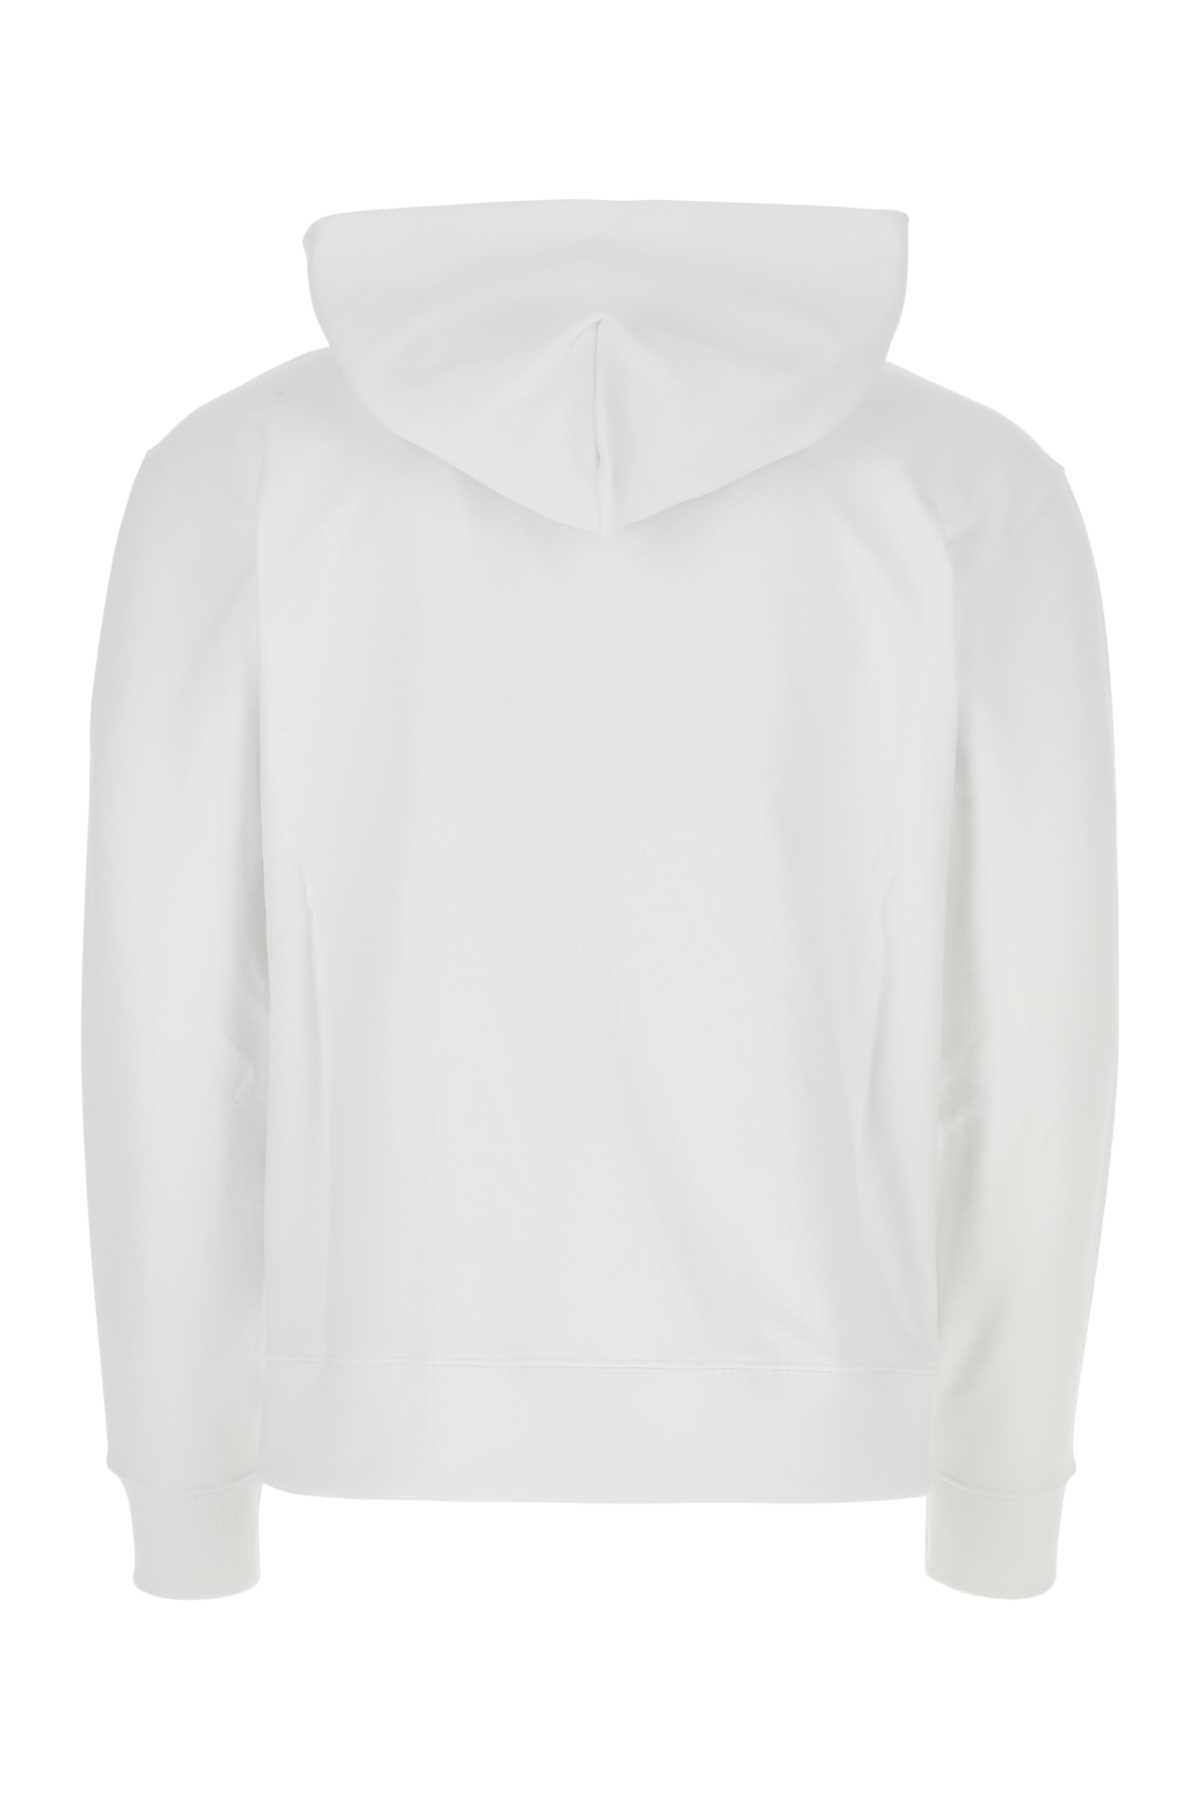 Kenzo White Stretch Cotton Sweatshirt In 01